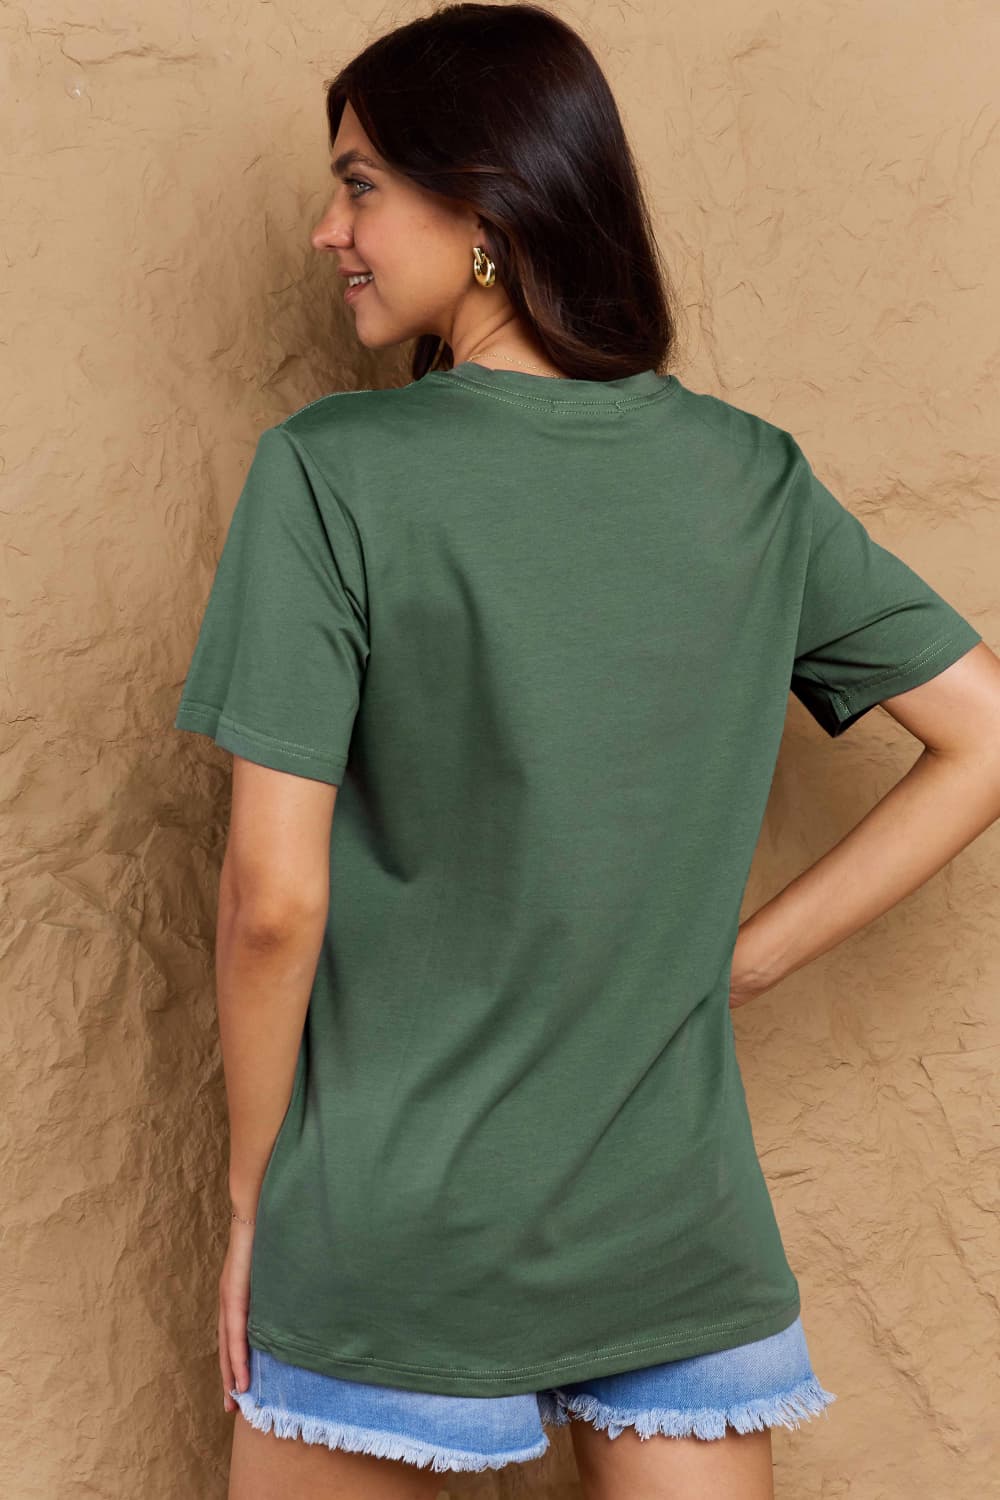 Simply Love Full Size Jack-O'-Lantern Graphic T-Shirt